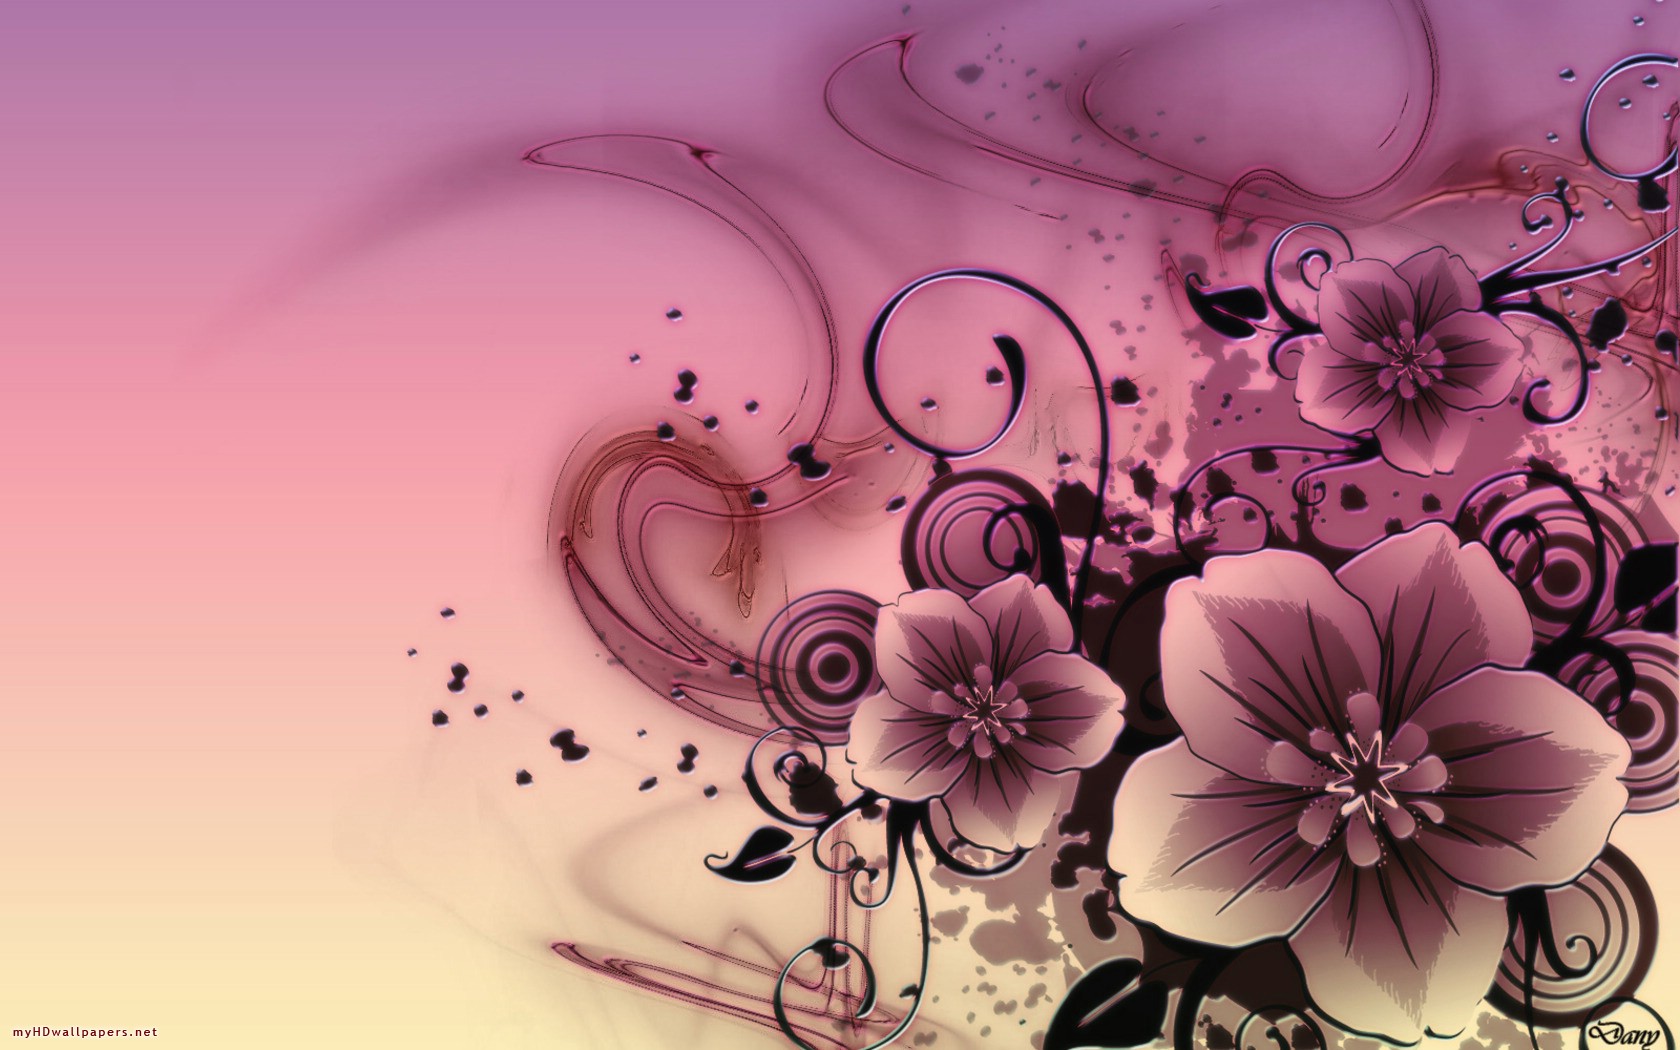 Free Download Abtract Flower Wallpaper Hd Desktop Wallpaper Gallery 1680x1050 For Your Desktop Mobile Tablet Explore 45 Pink Flowers Hd Wallpaper Pink Flowers Wallpaper Pink Flowers Wallpapers For Desktop